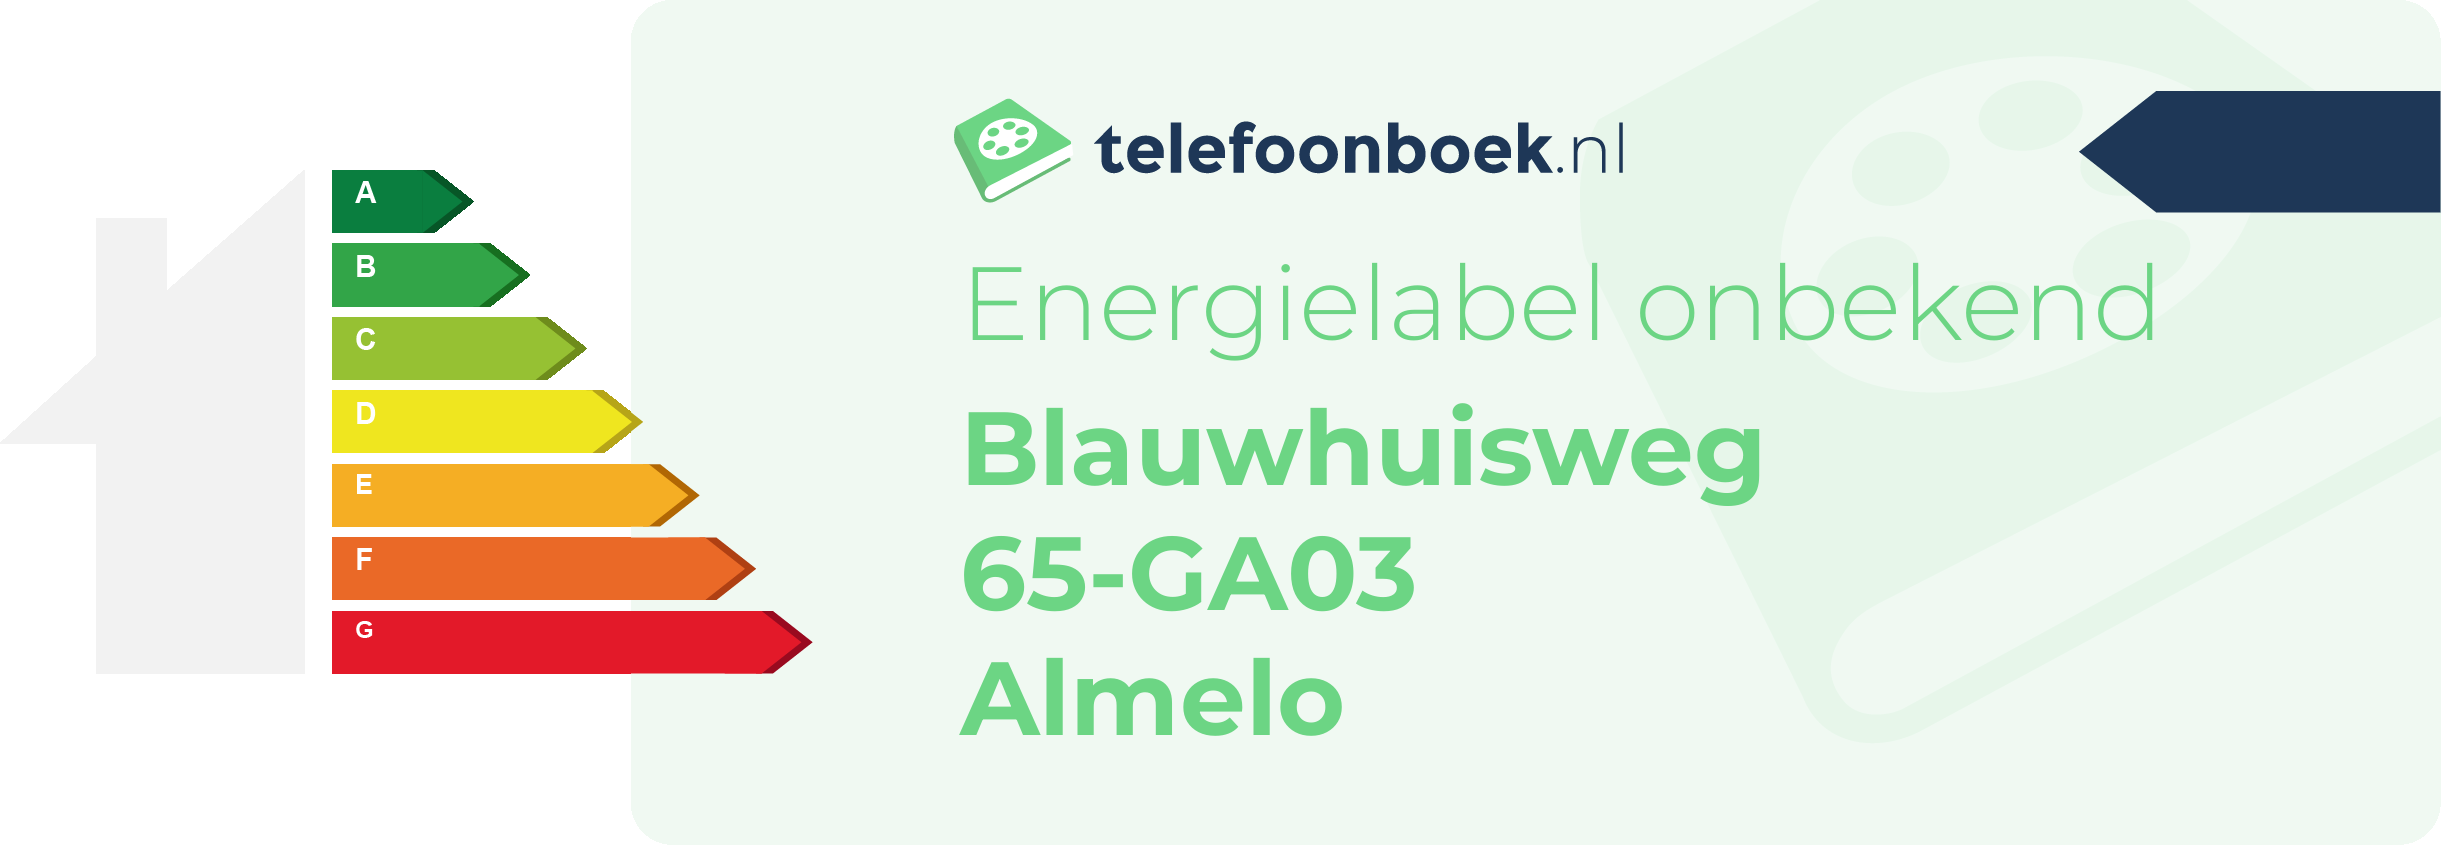 Energielabel Blauwhuisweg 65-GA03 Almelo